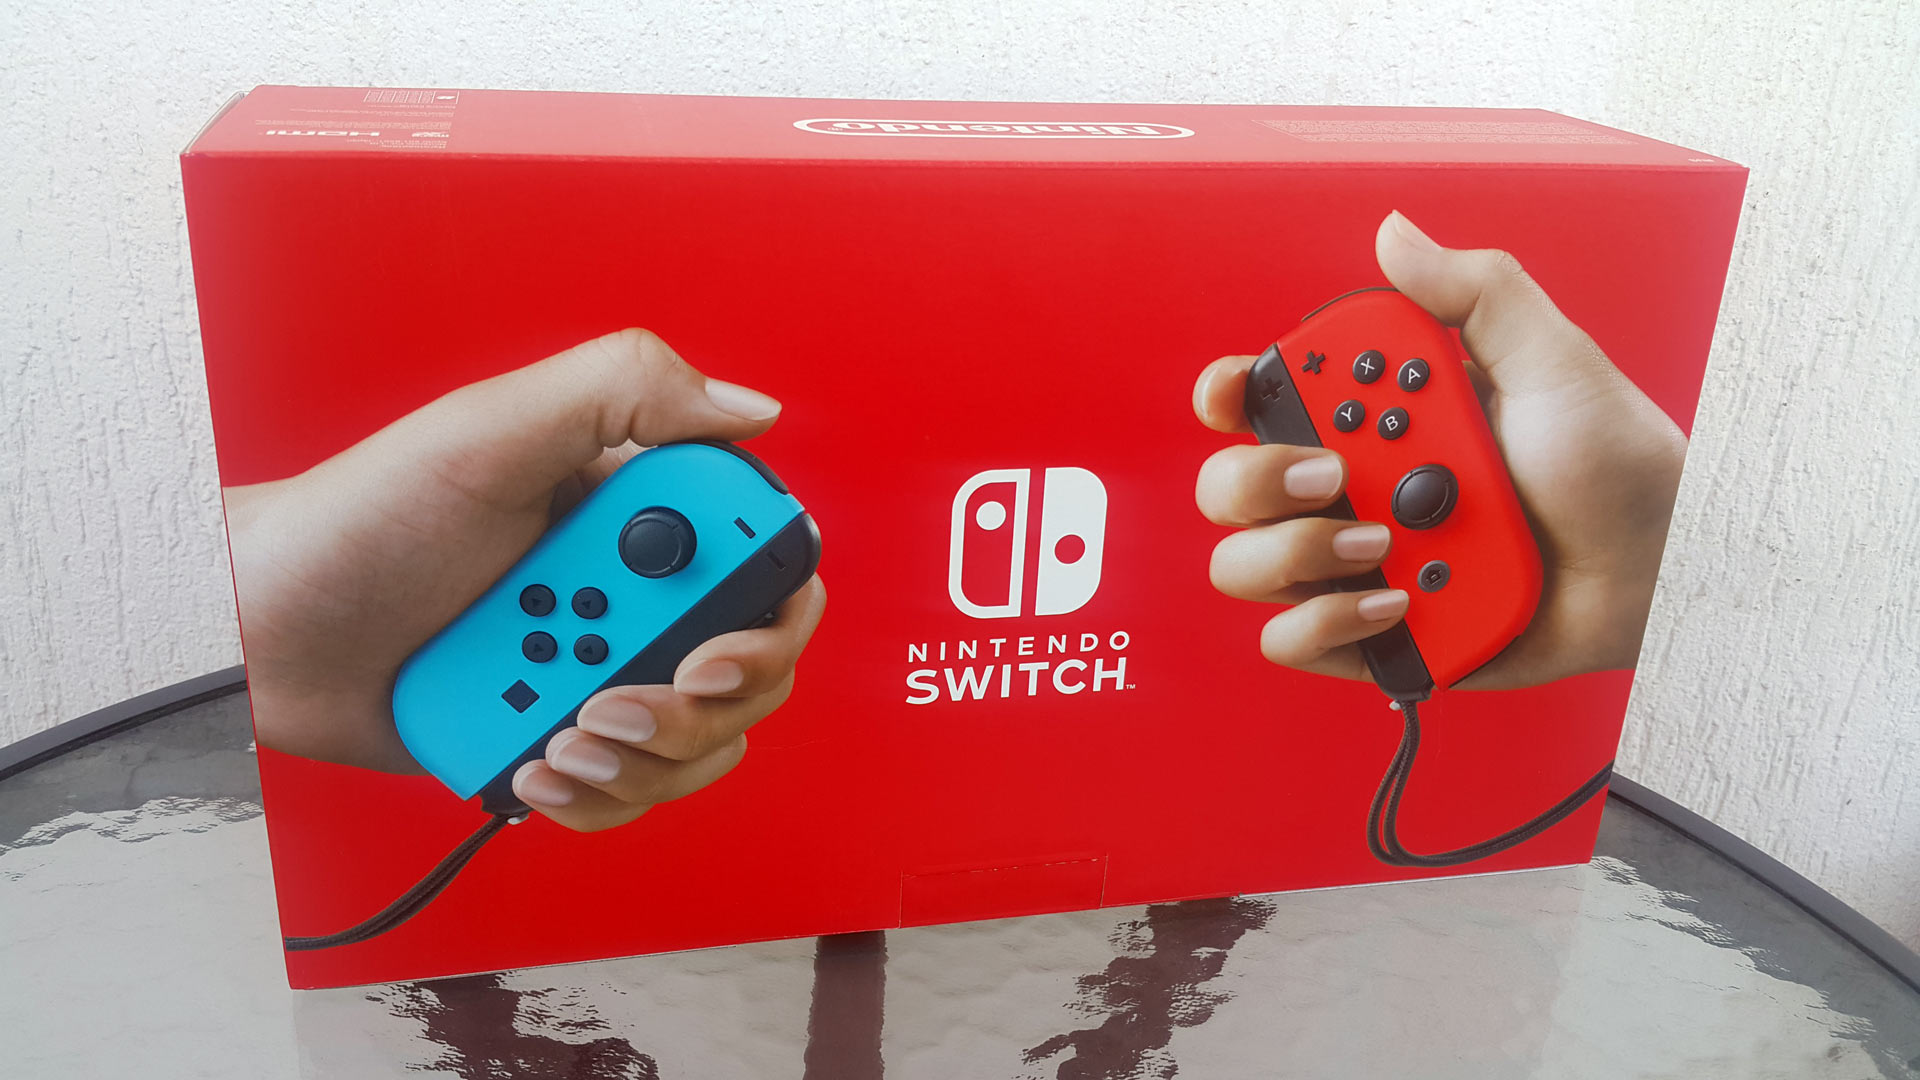 Nintendo switch 1 2 switch. Нинтендо свитч 2. Коробка Нинтендо свитч 2. Коробка от Nintendo Switch. Nintendo Switch 1.